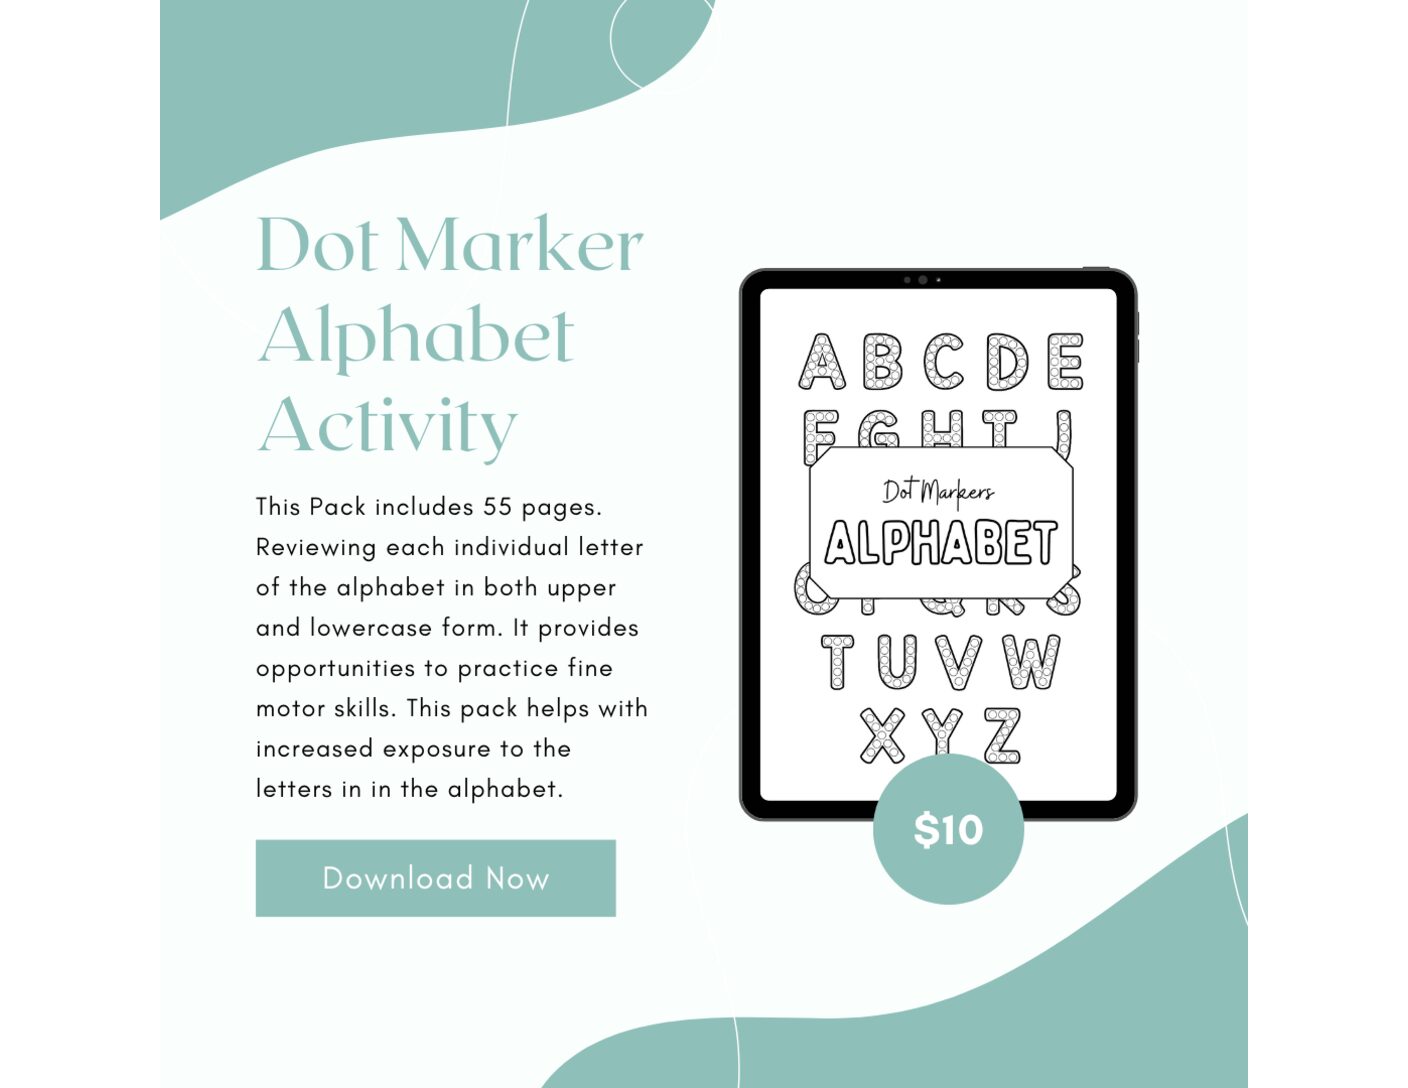 The Dot Marker Alphabet Activity Pack